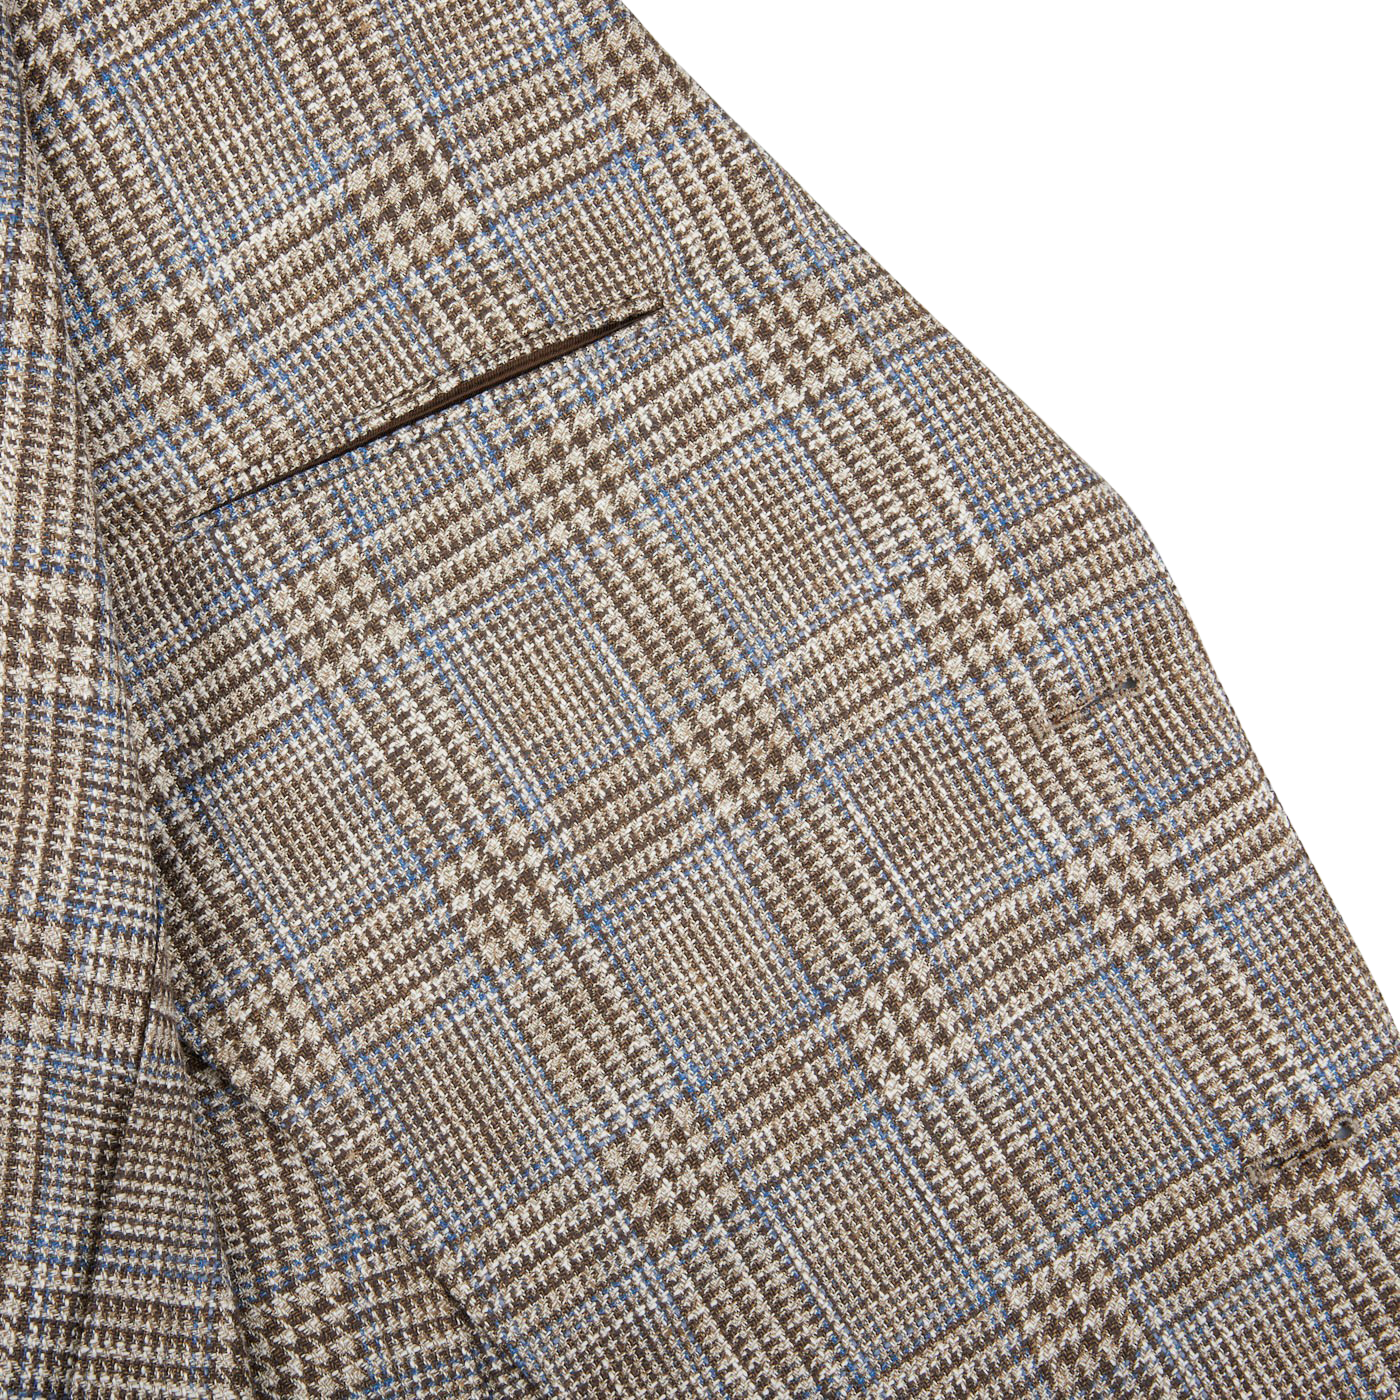 A close up of a Luigi Bianchi Brown Checked Wool Cotton Linen Blazer.